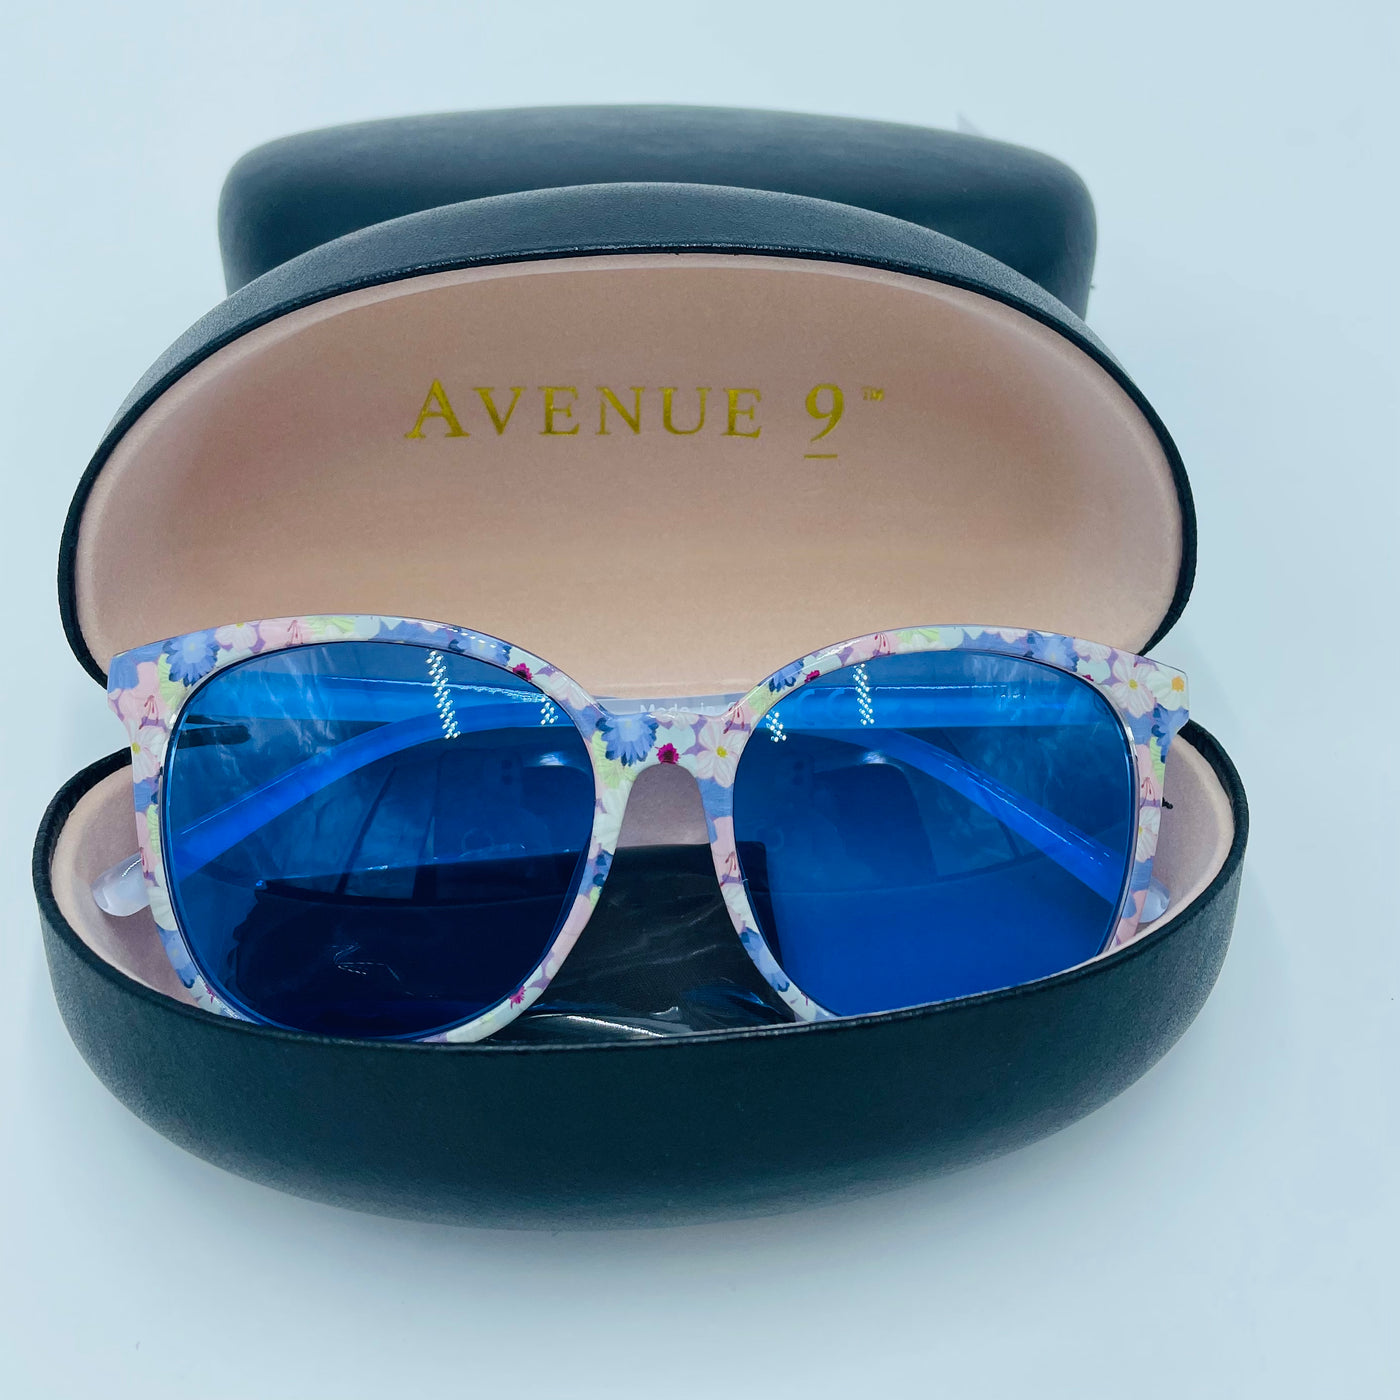 Mystery Avenue 9 Sunglasses